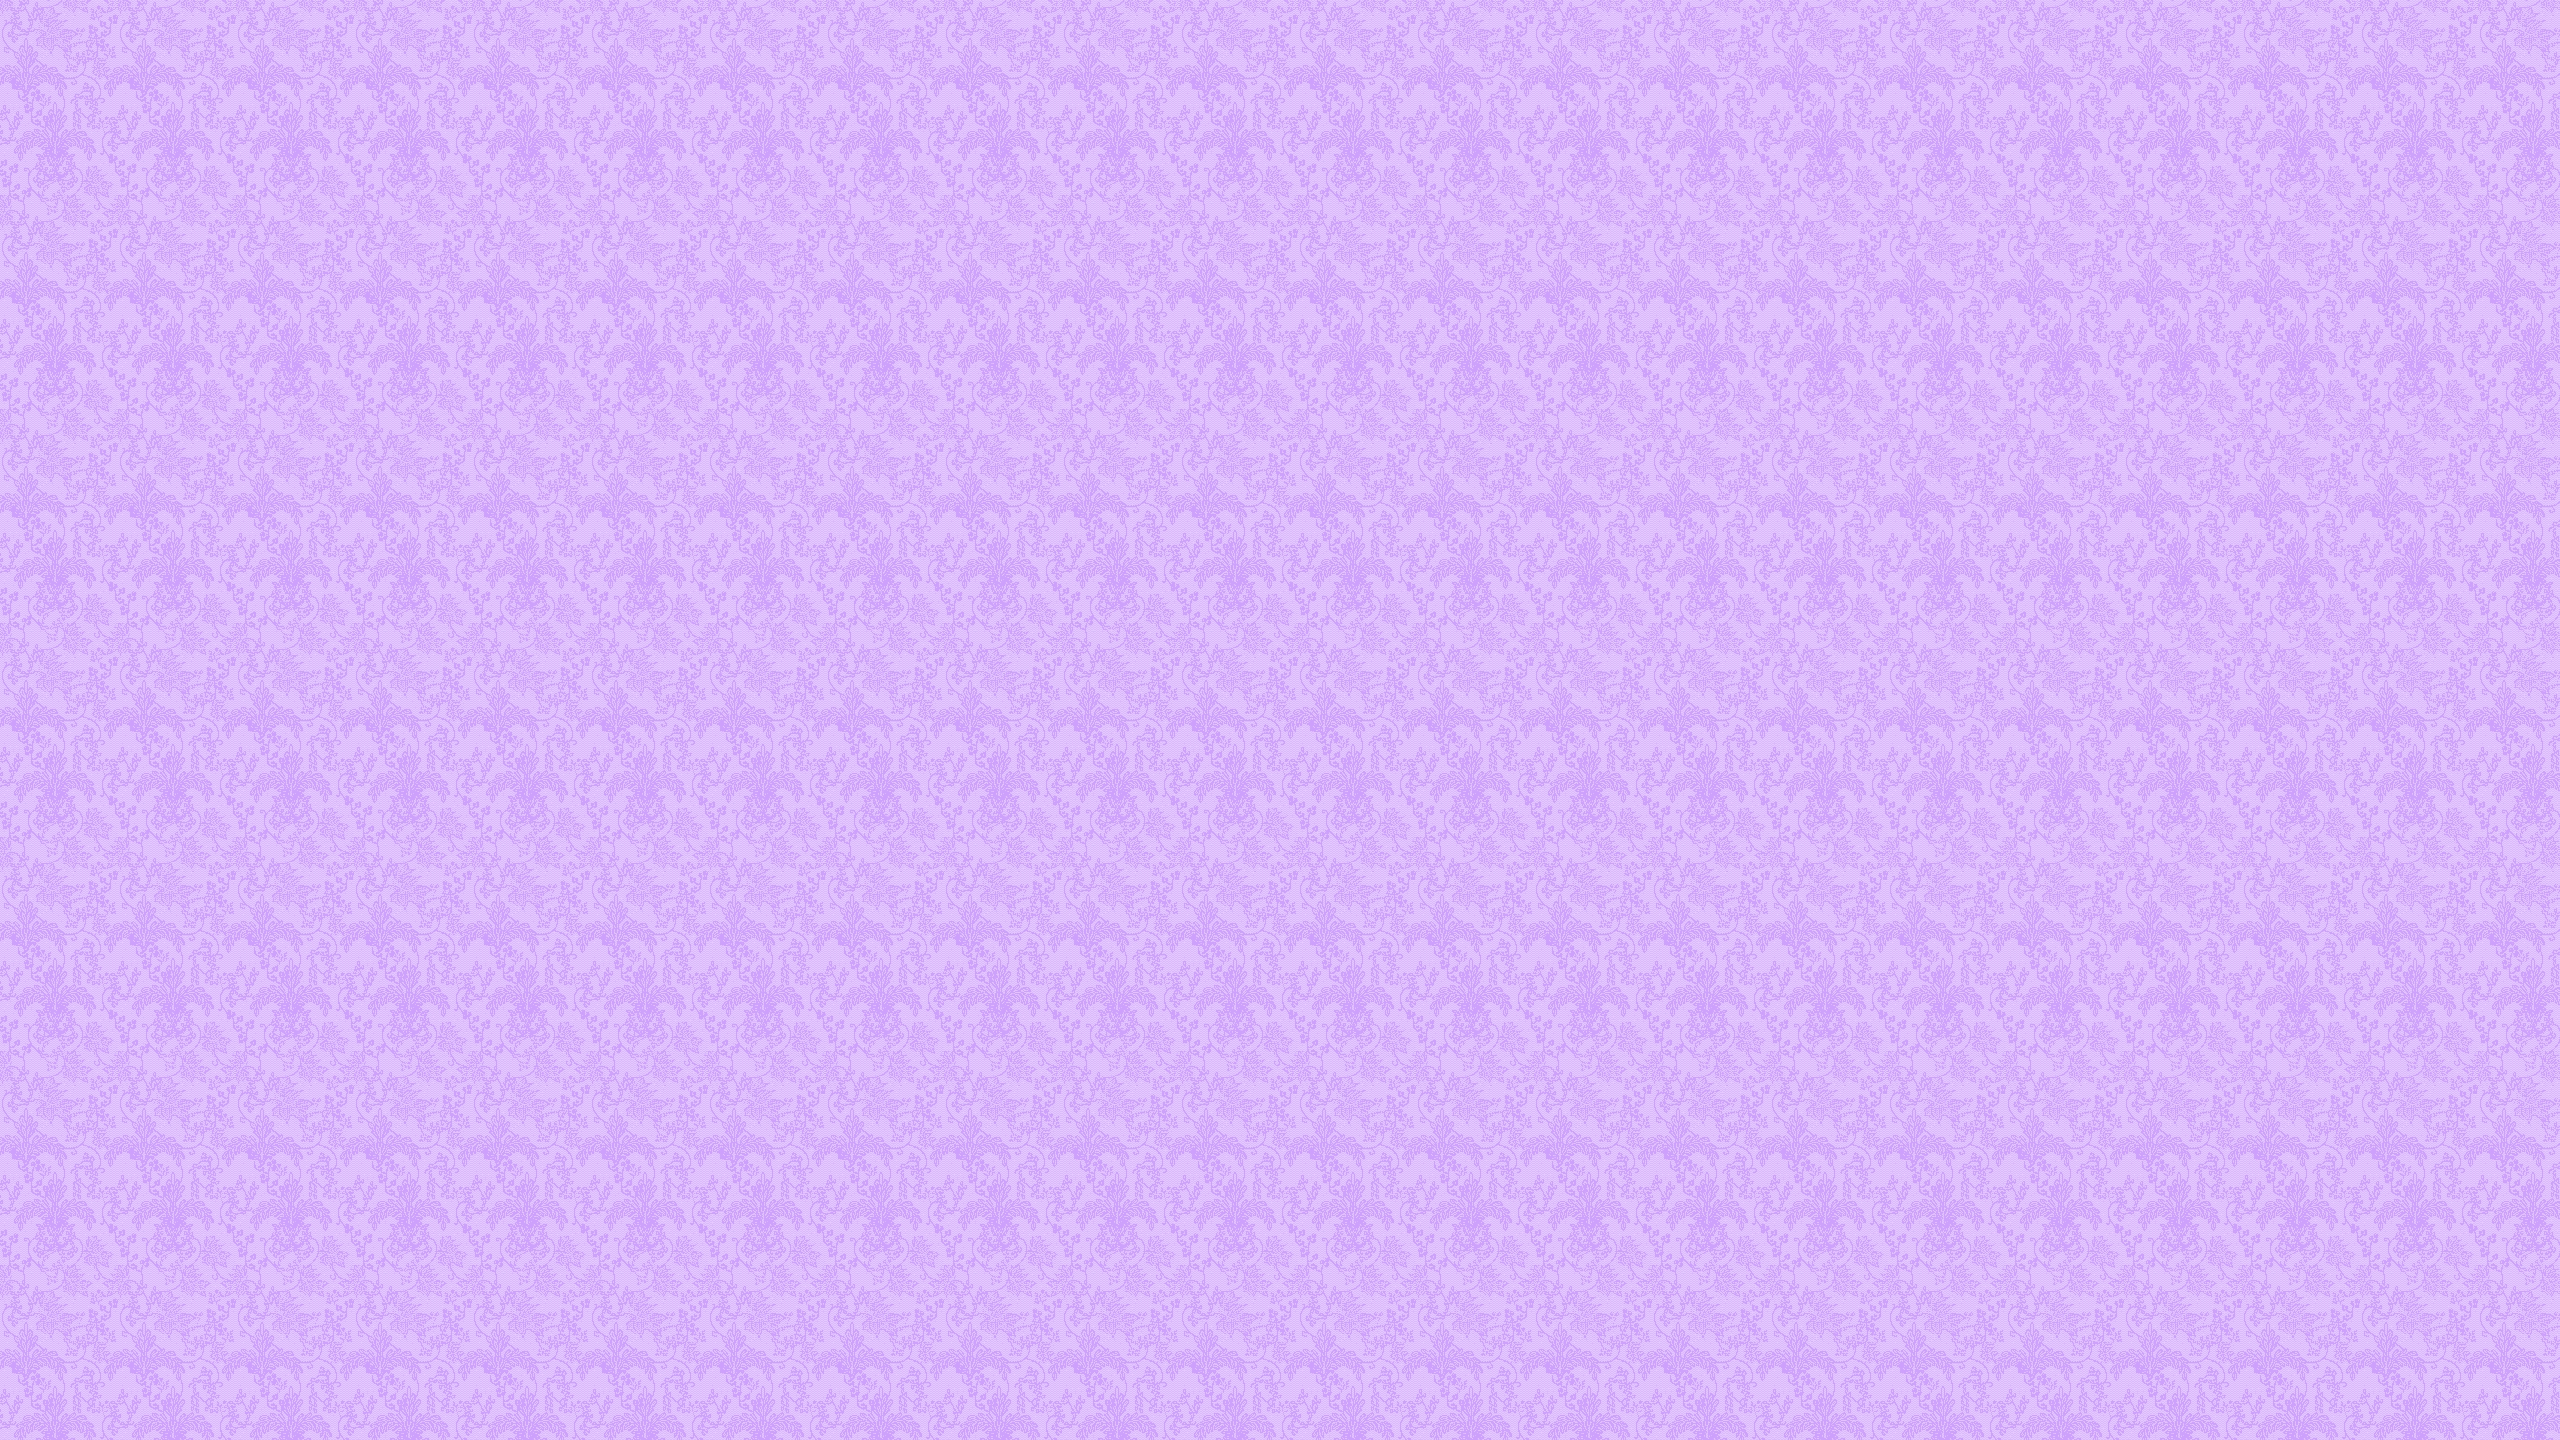 This Purple Vintage Desktop Wallpaper Is Easy Just Save The